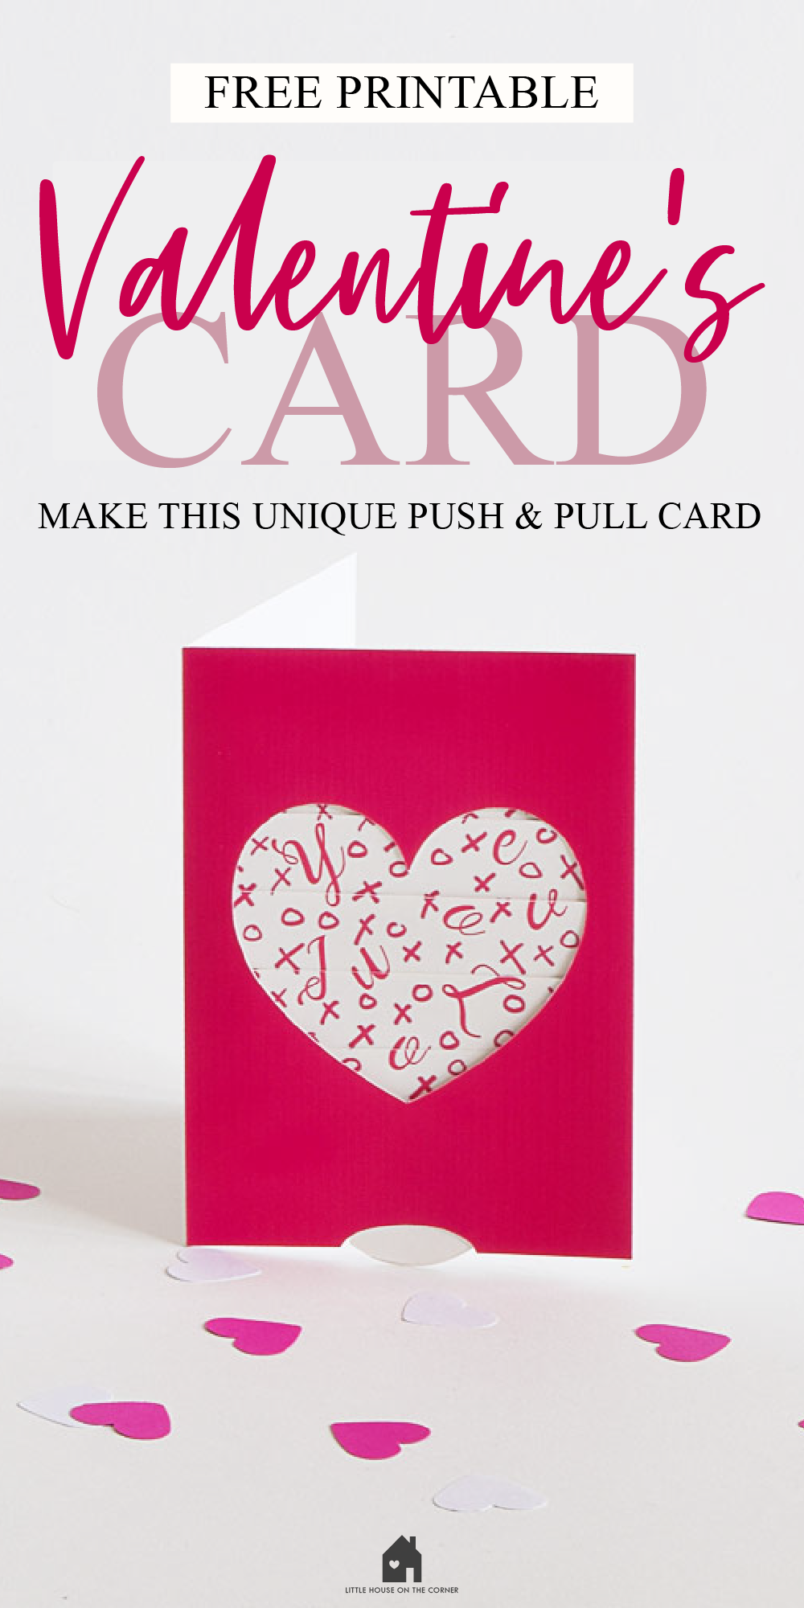 Valentine's Card Free Printable